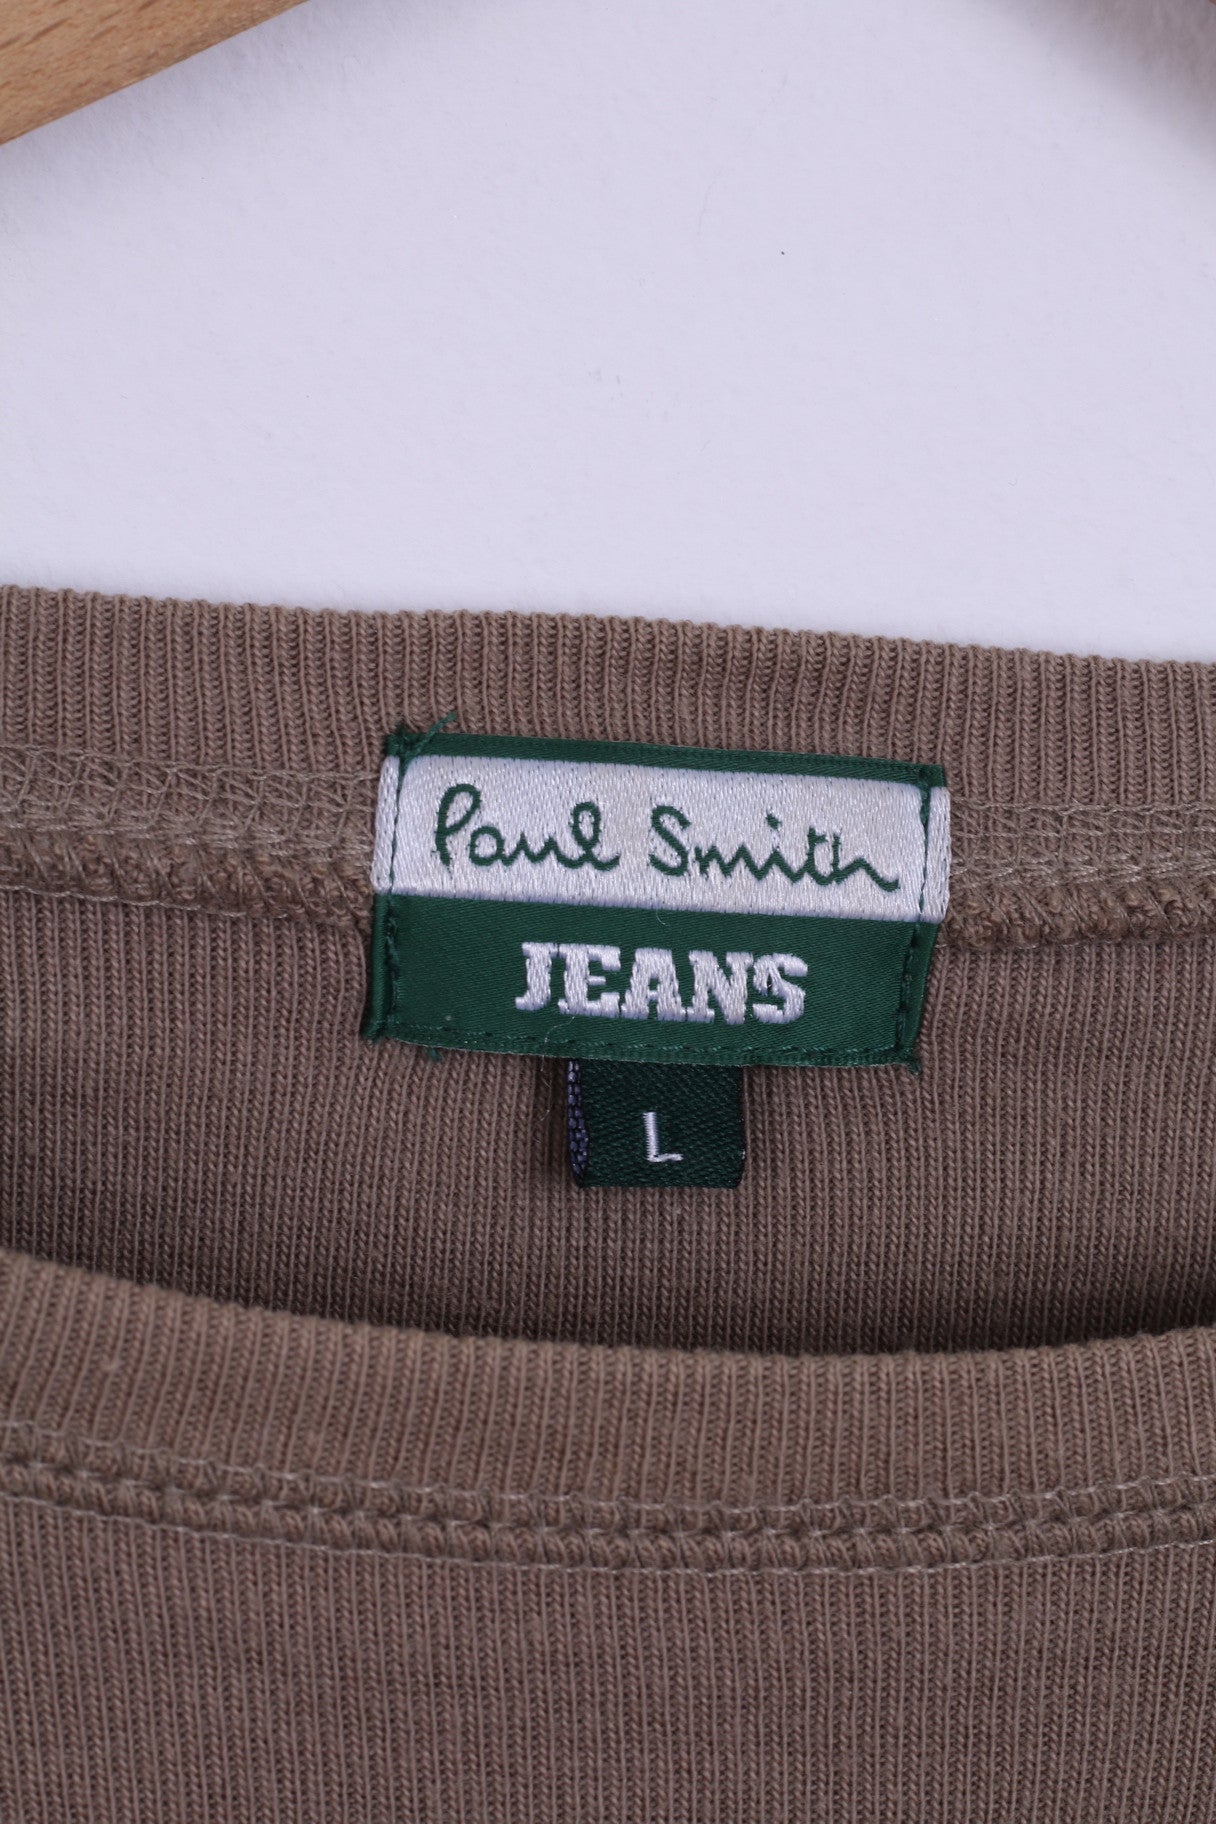 Paul Smith Jeans Mens L Shirt Long Sleeved Khaki Cotton Top